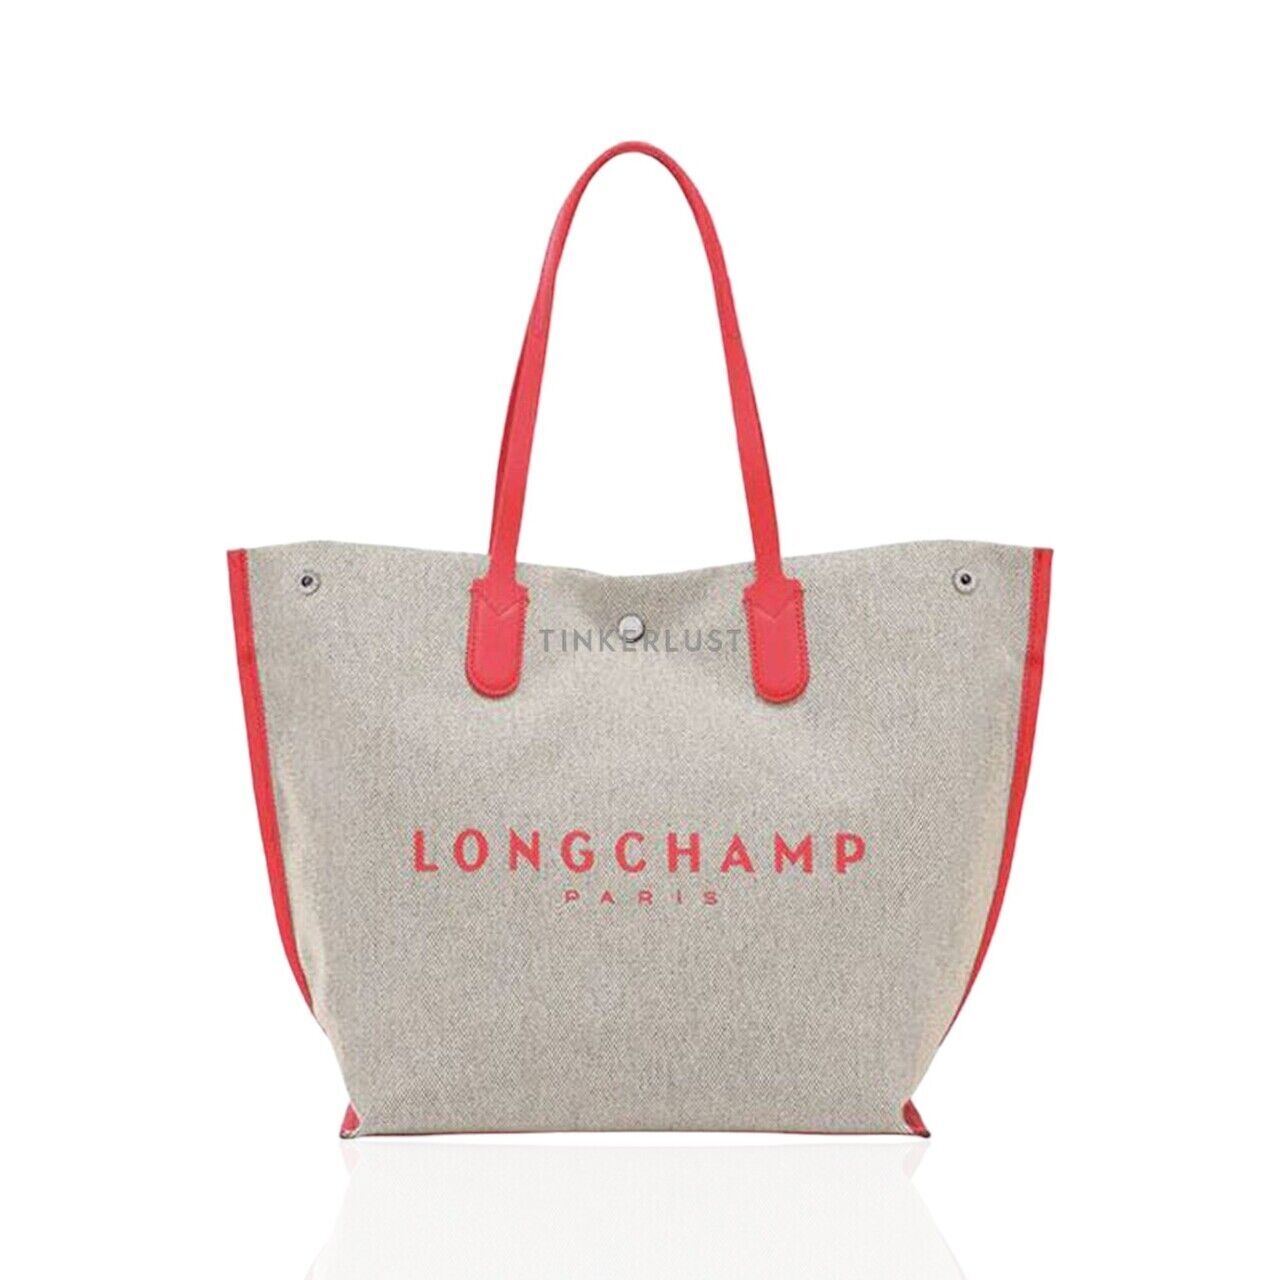 Longchamp Roseau Tote Large Essential Shopping Bag in Fragola